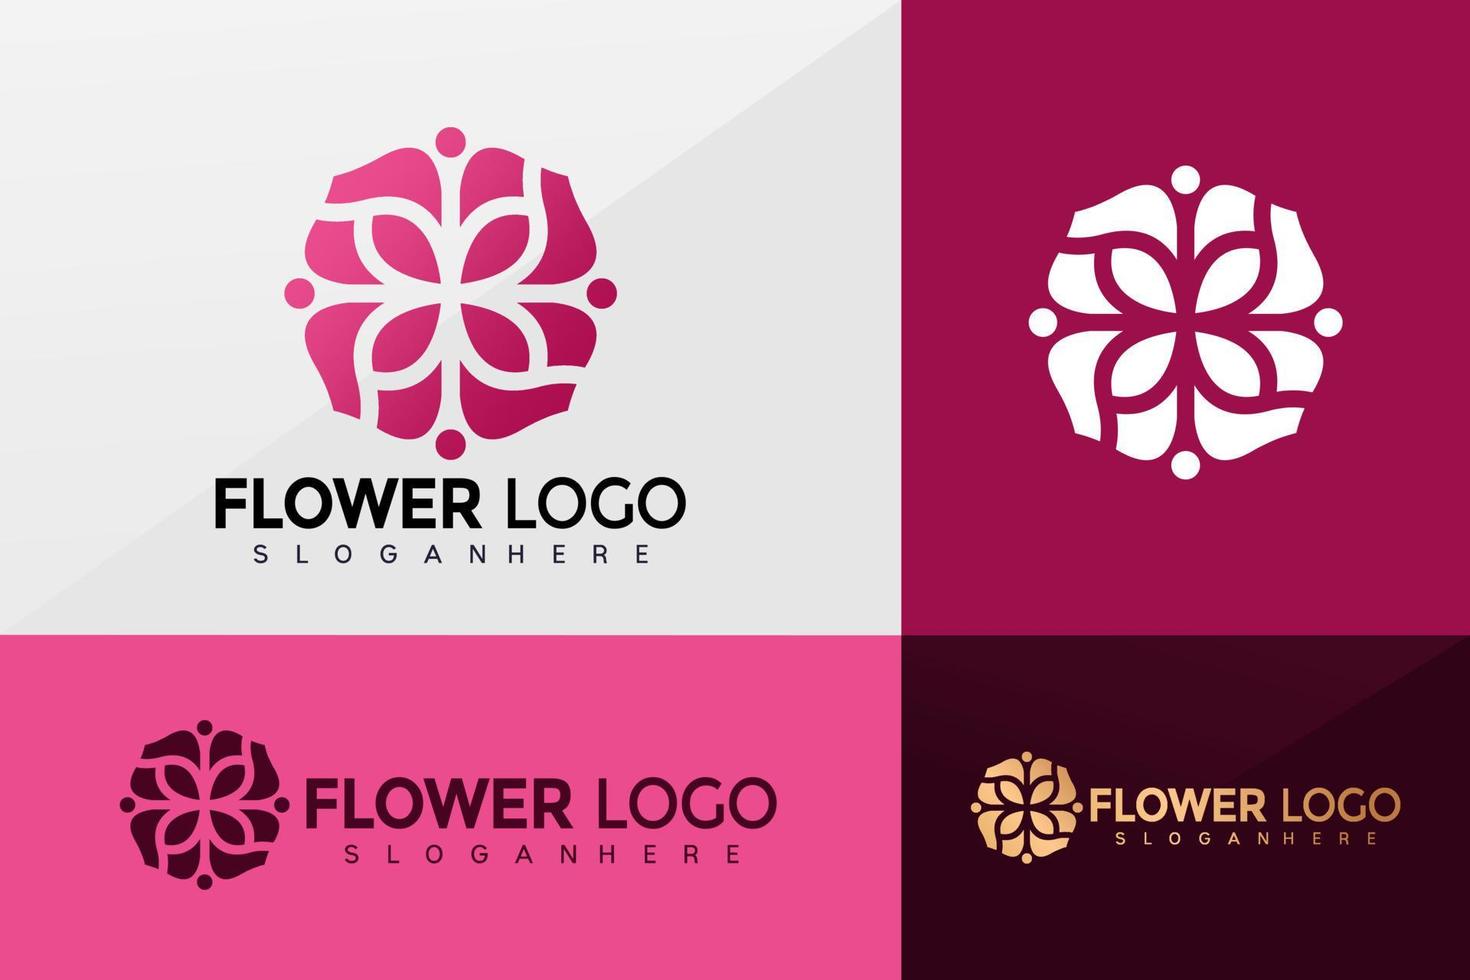 blomma logotyp vektor, blomma mode logotyper design, modern logotyp, logotyp design vektor illustration mall